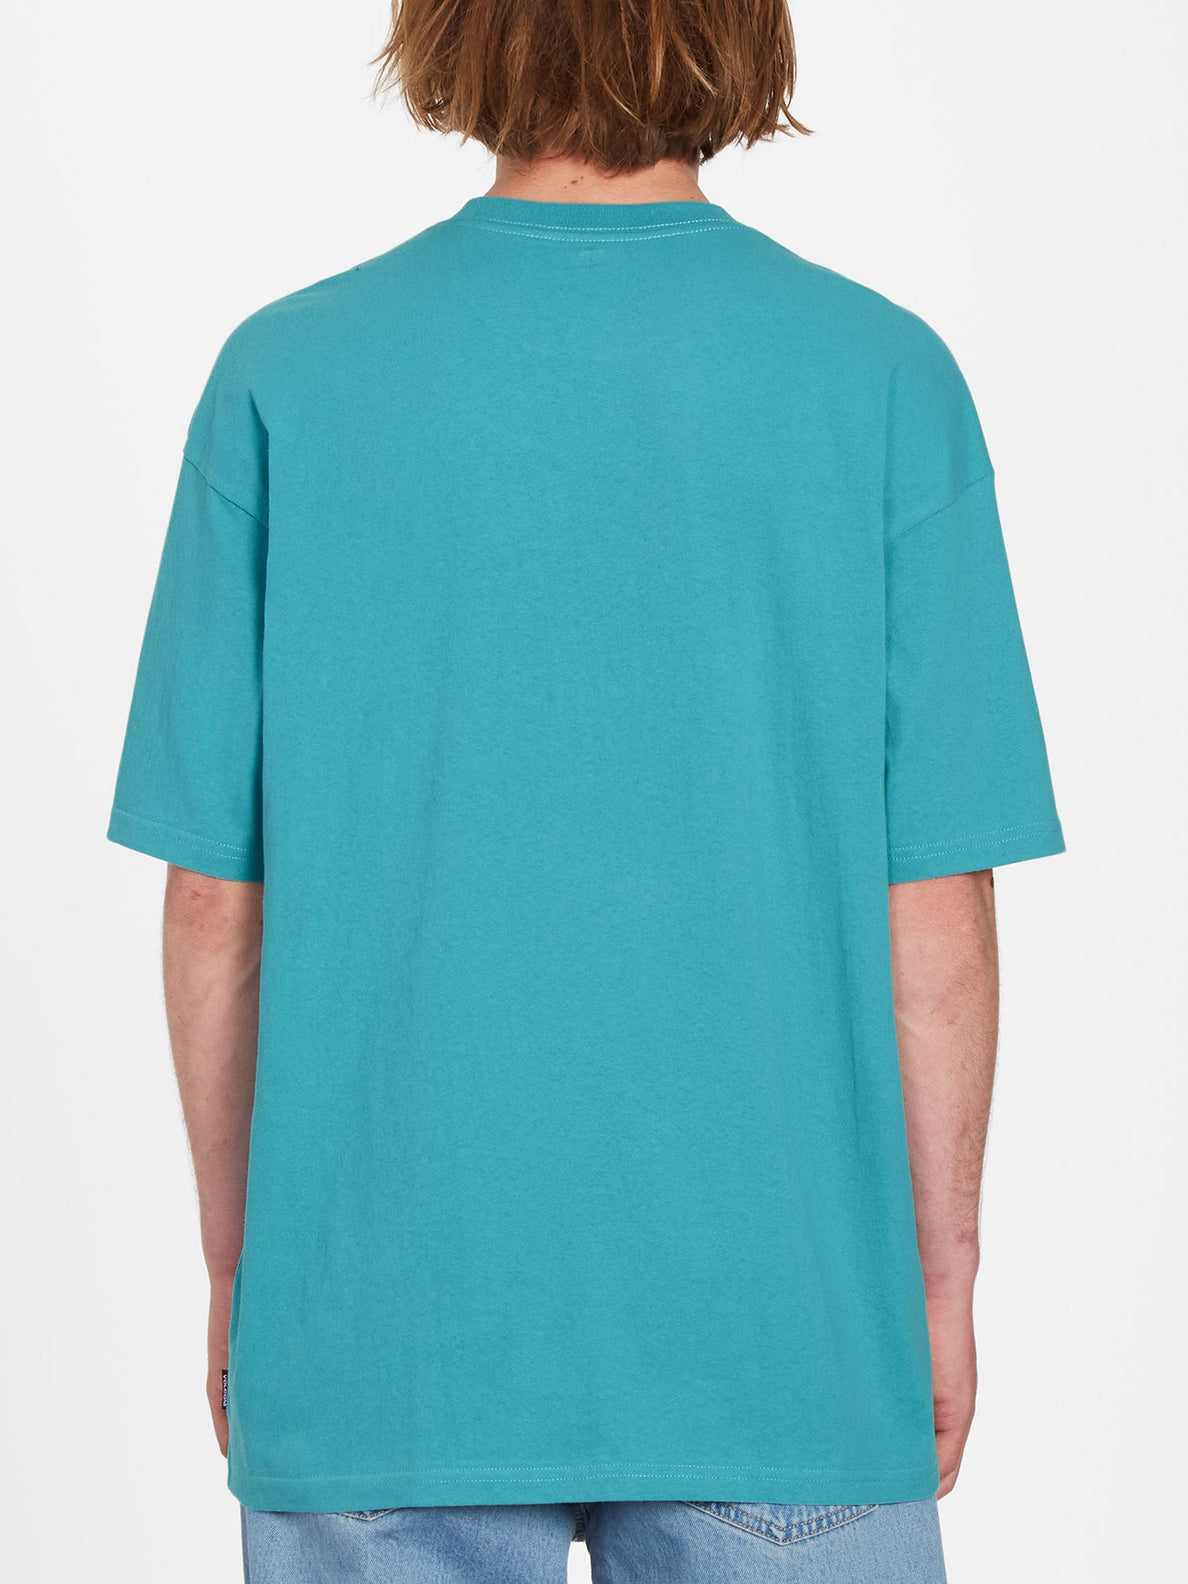 Todd Bratrud 2 T-shirt - TEMPLE TEAL (A5212307_TMT) [B]